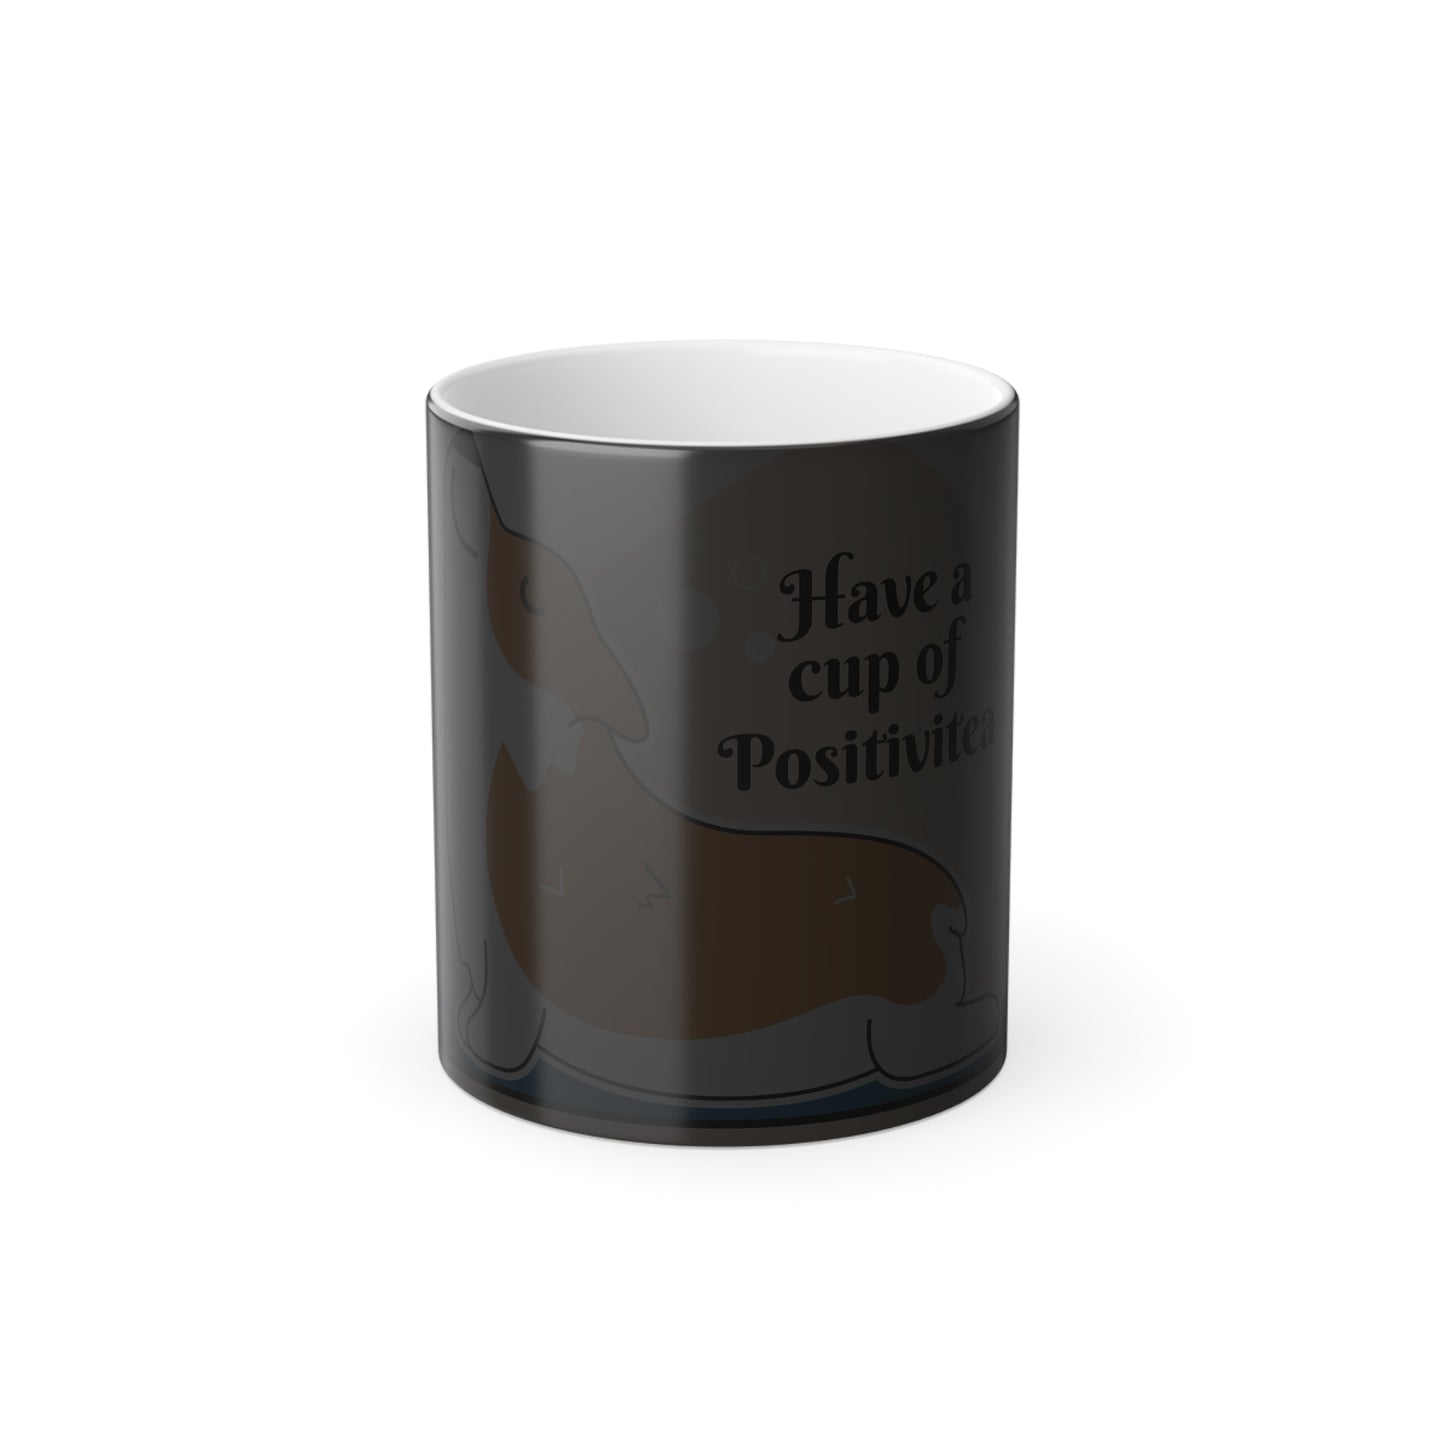 Have A Cup of Positivitea!